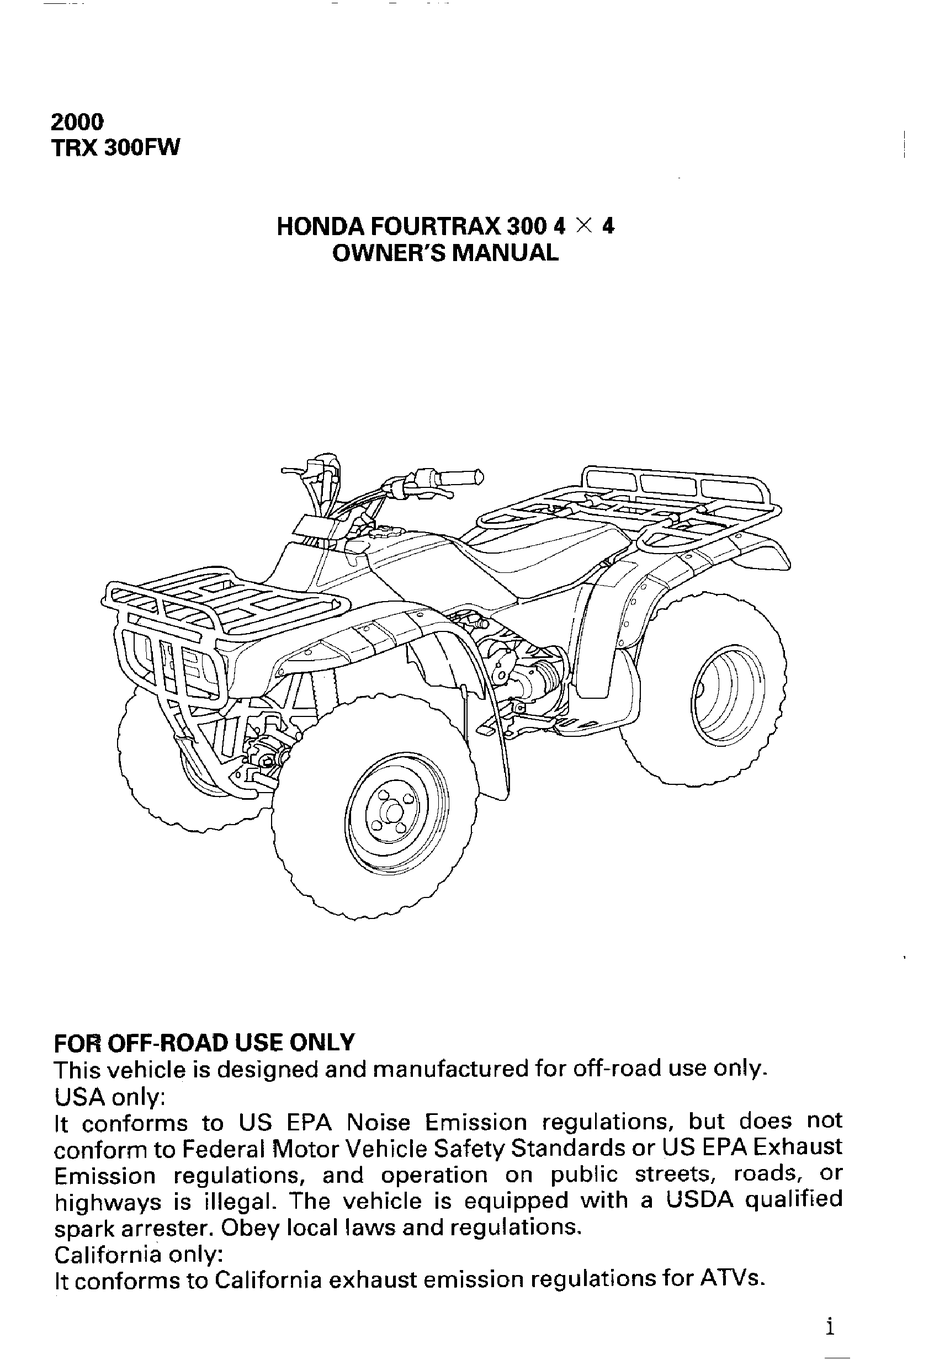 1988 honda fourtrax 300 service manual pdf download hatch font free download